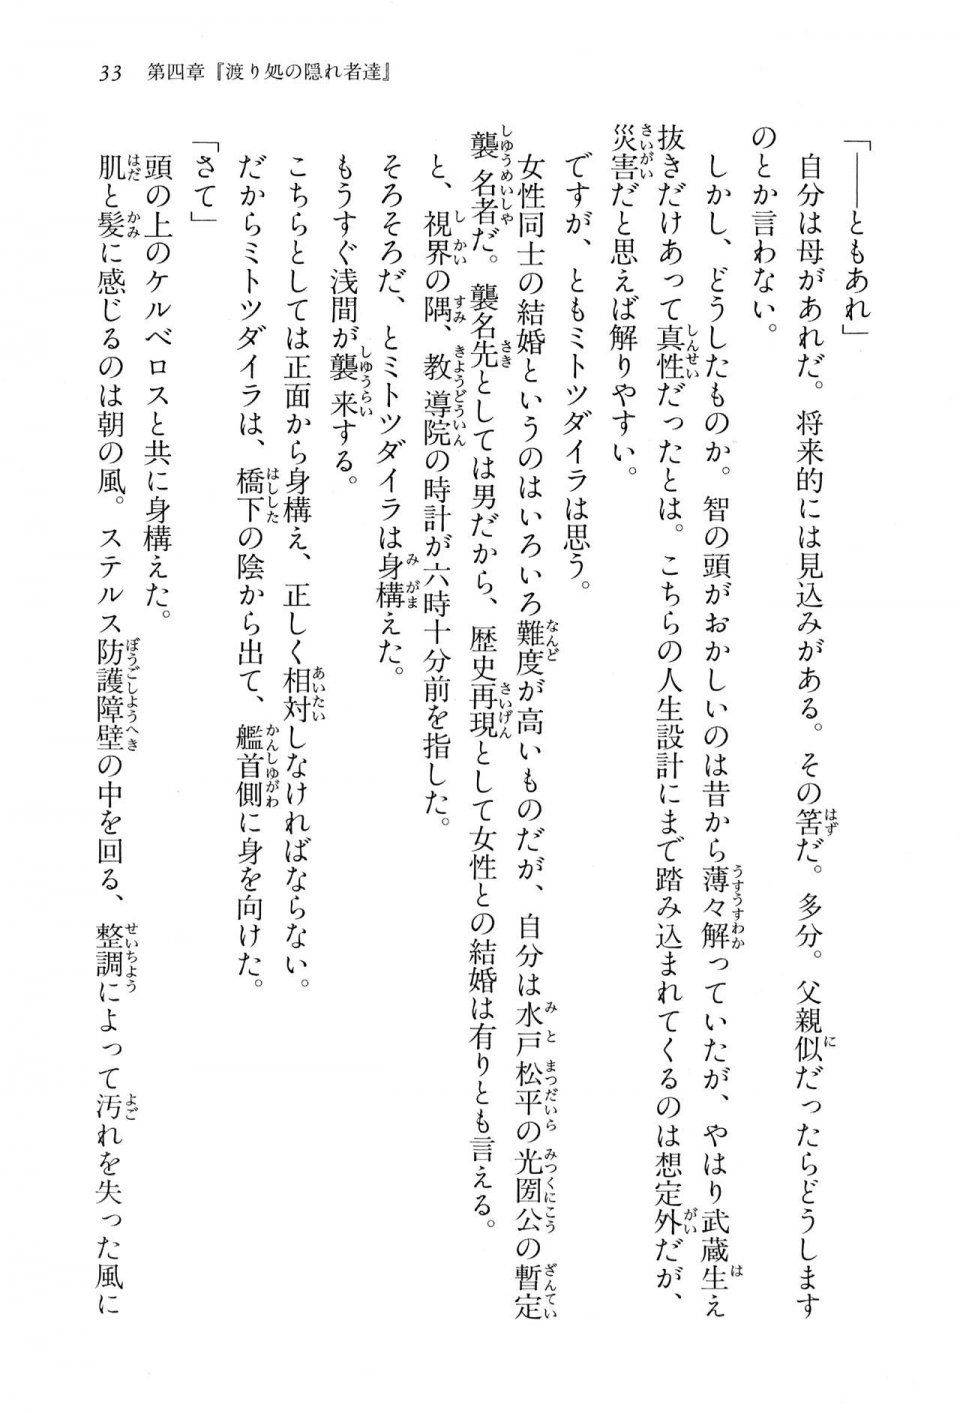 Kyoukai Senjou no Horizon BD Special Mininovel Vol 2(1B) - Photo #37